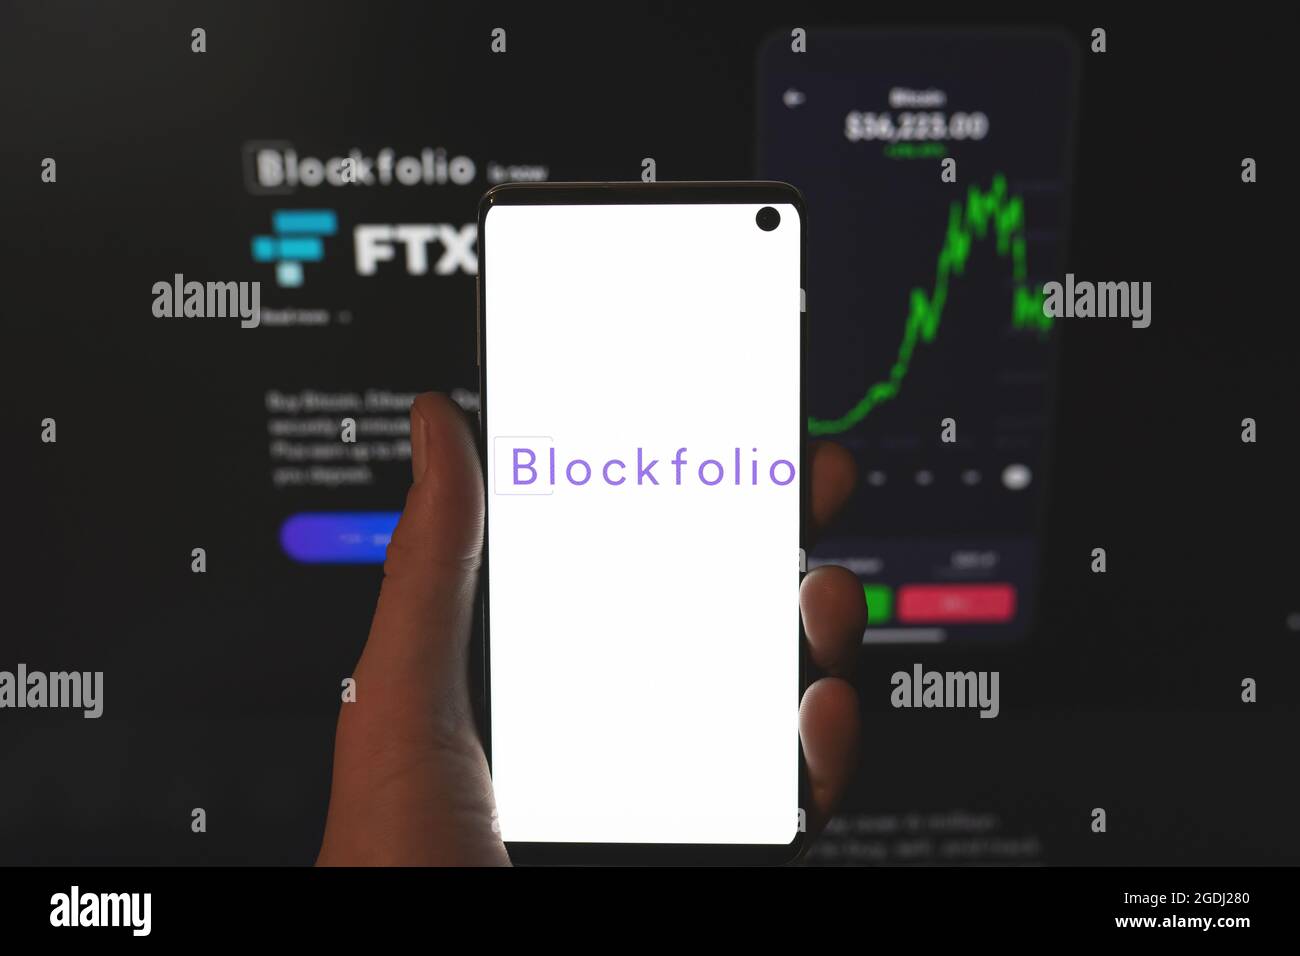 Blockfolio logo on smartphone in hand with blurred website background. Cryptocurrency exchange, crypto portfolio tracker platform. Swansea, UK - July 31, 2021 Stock Photo